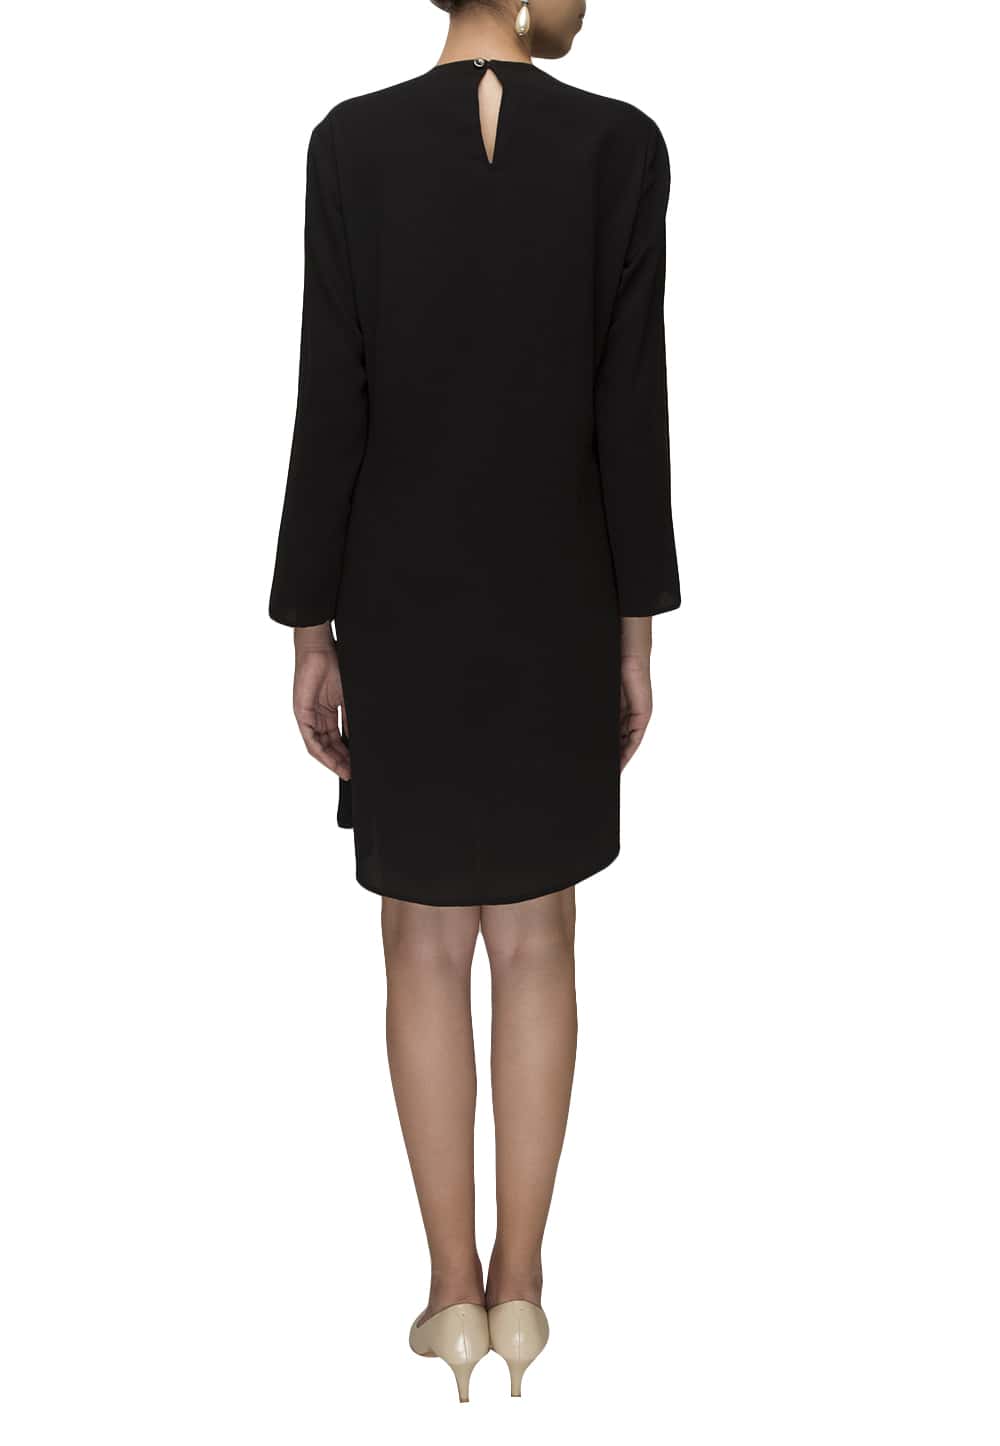 Black embellished flange short dress available only at IBFW